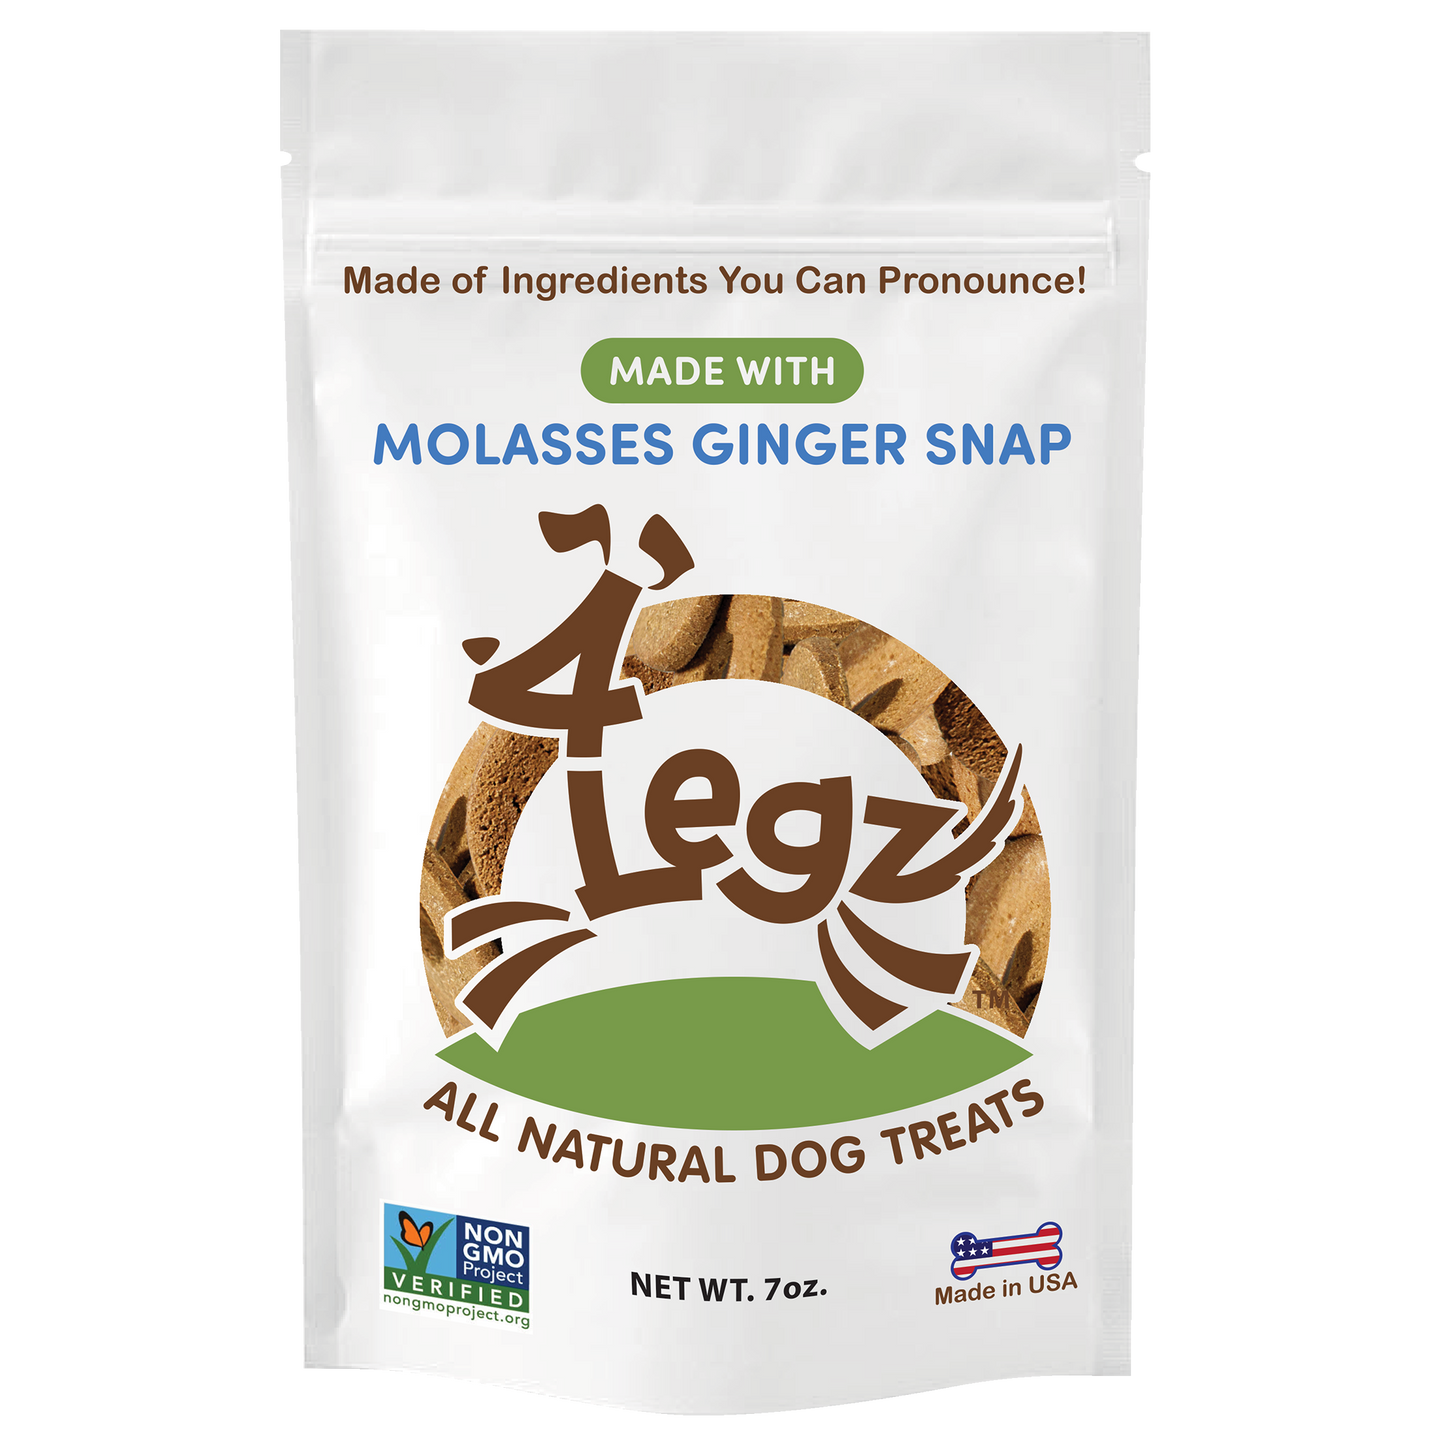 Molasses Ginger Snap "Dognutz"